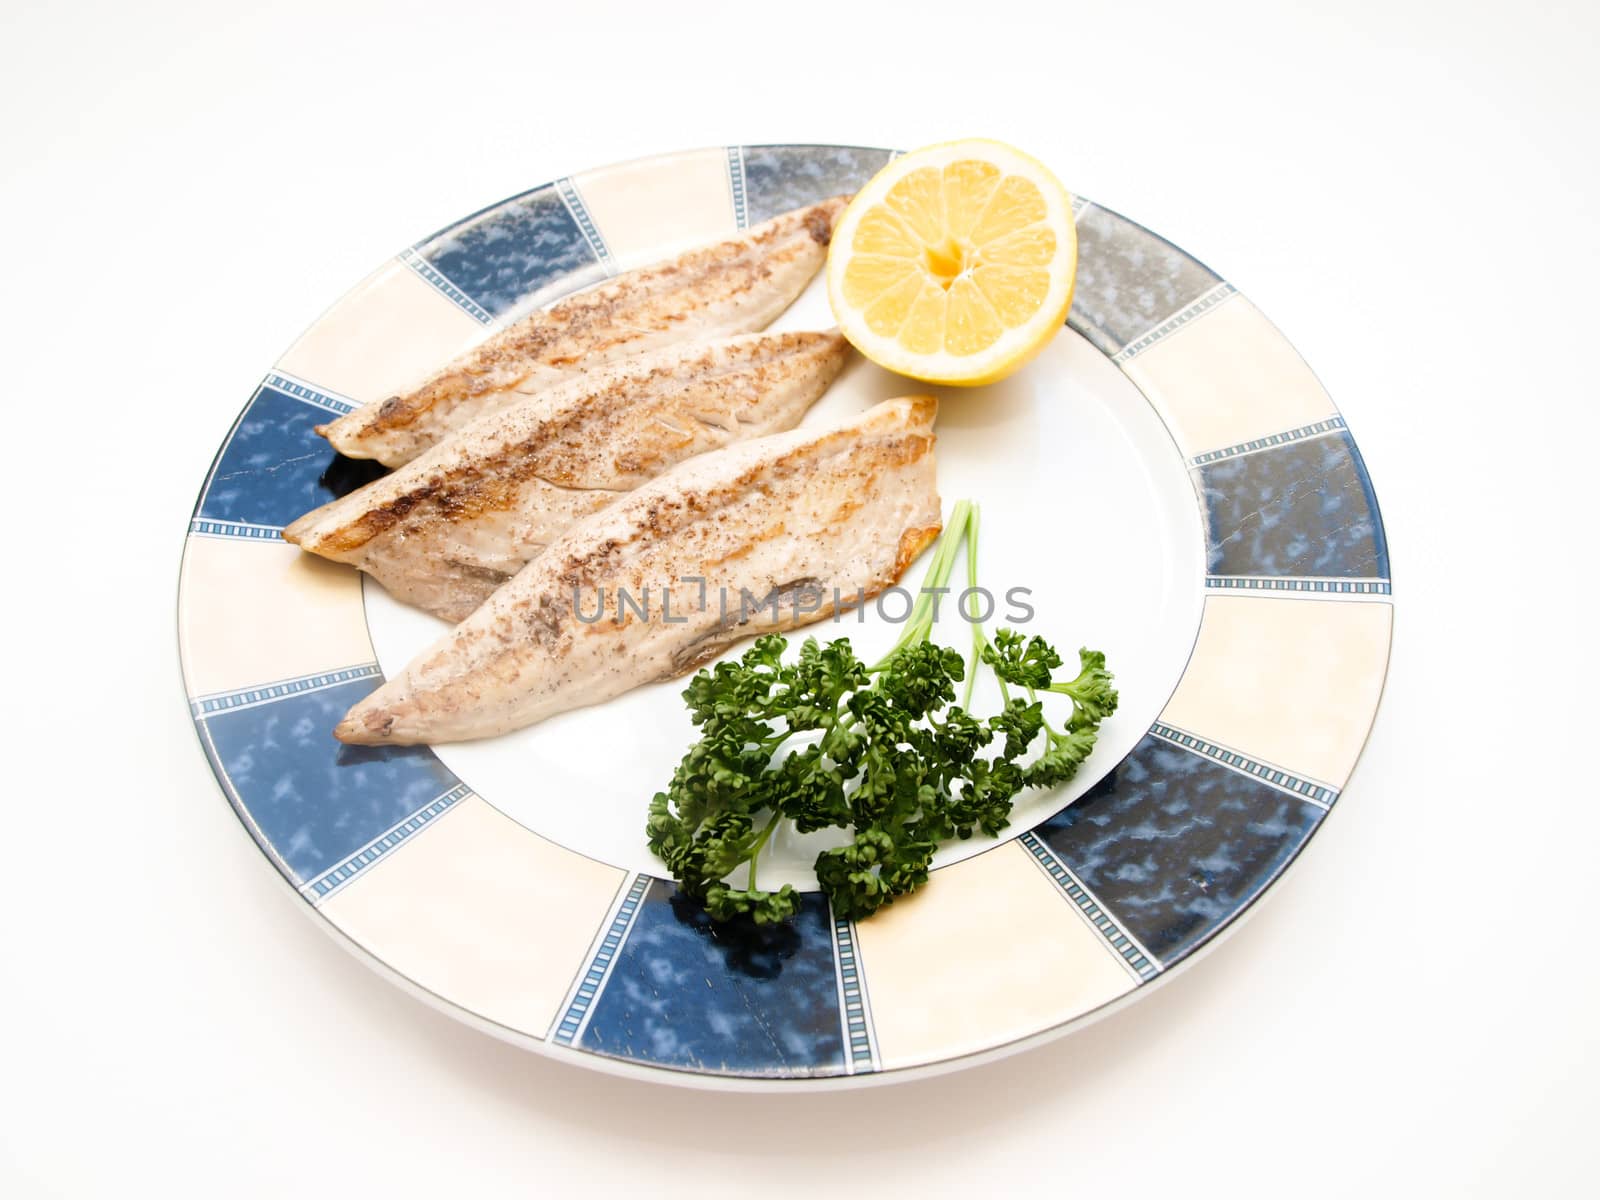 Fried mackerel filet by Arvebettum